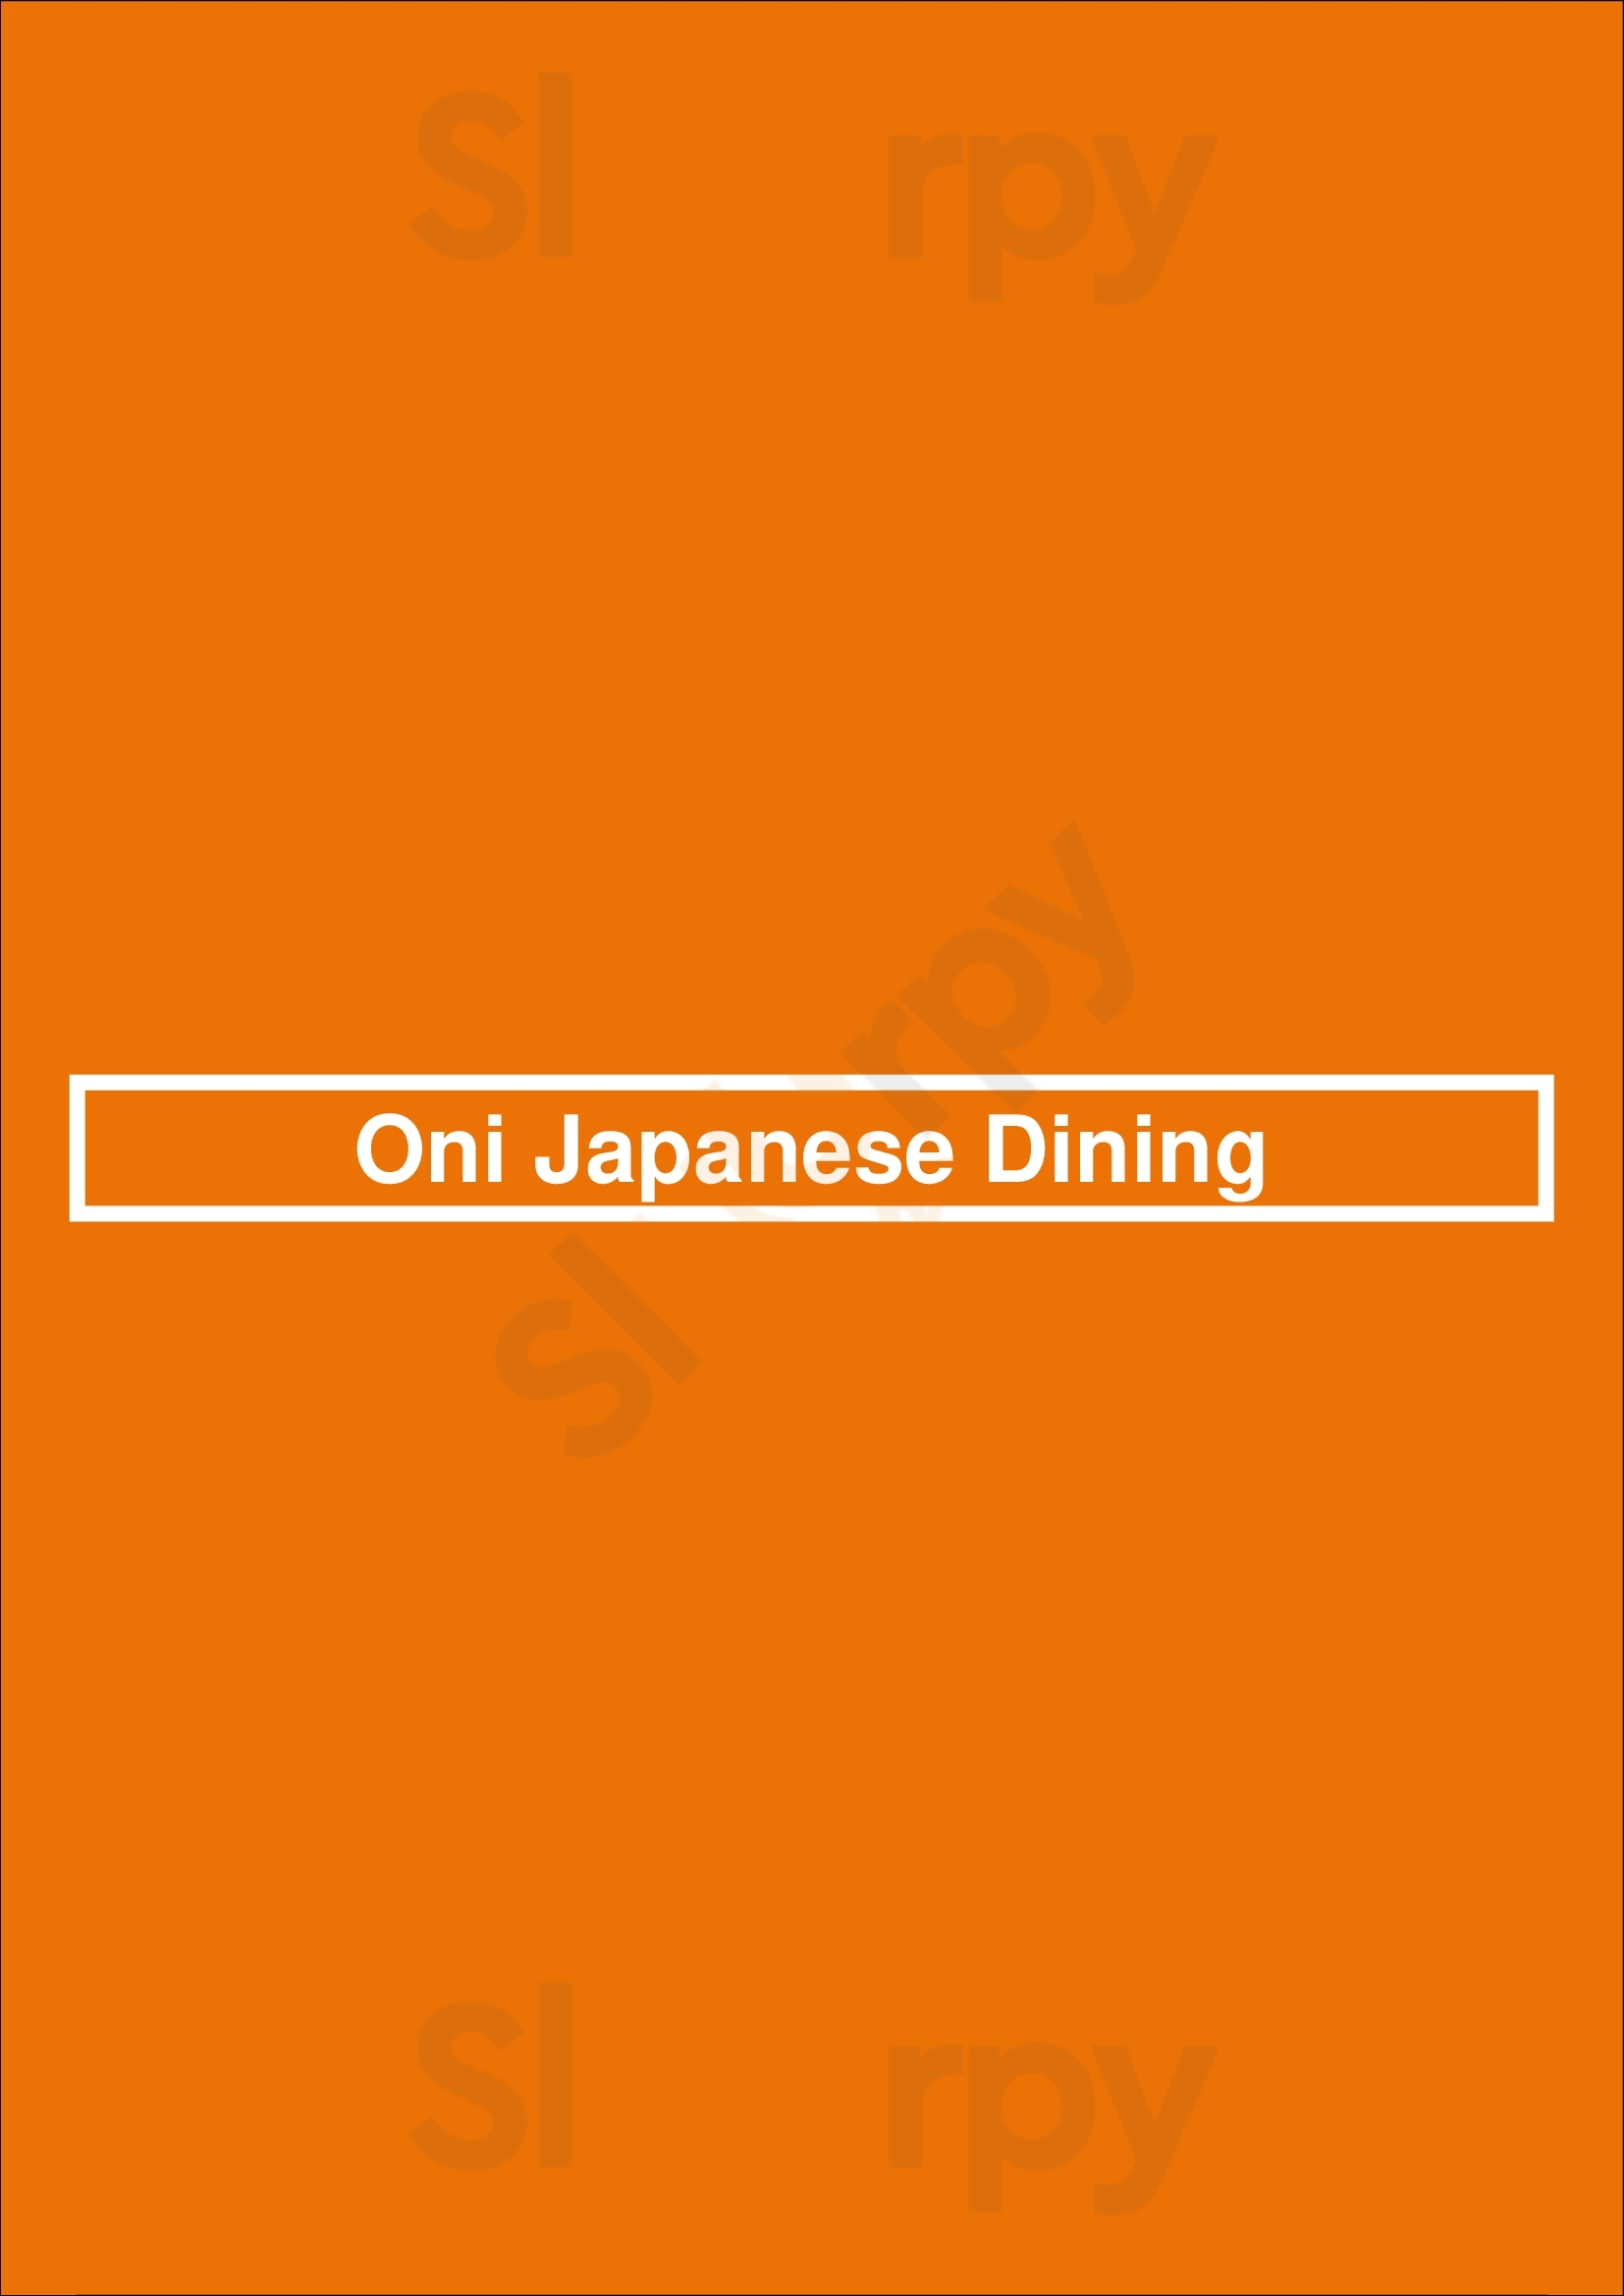 Oni Japanese Dining Den Haag Menu - 1